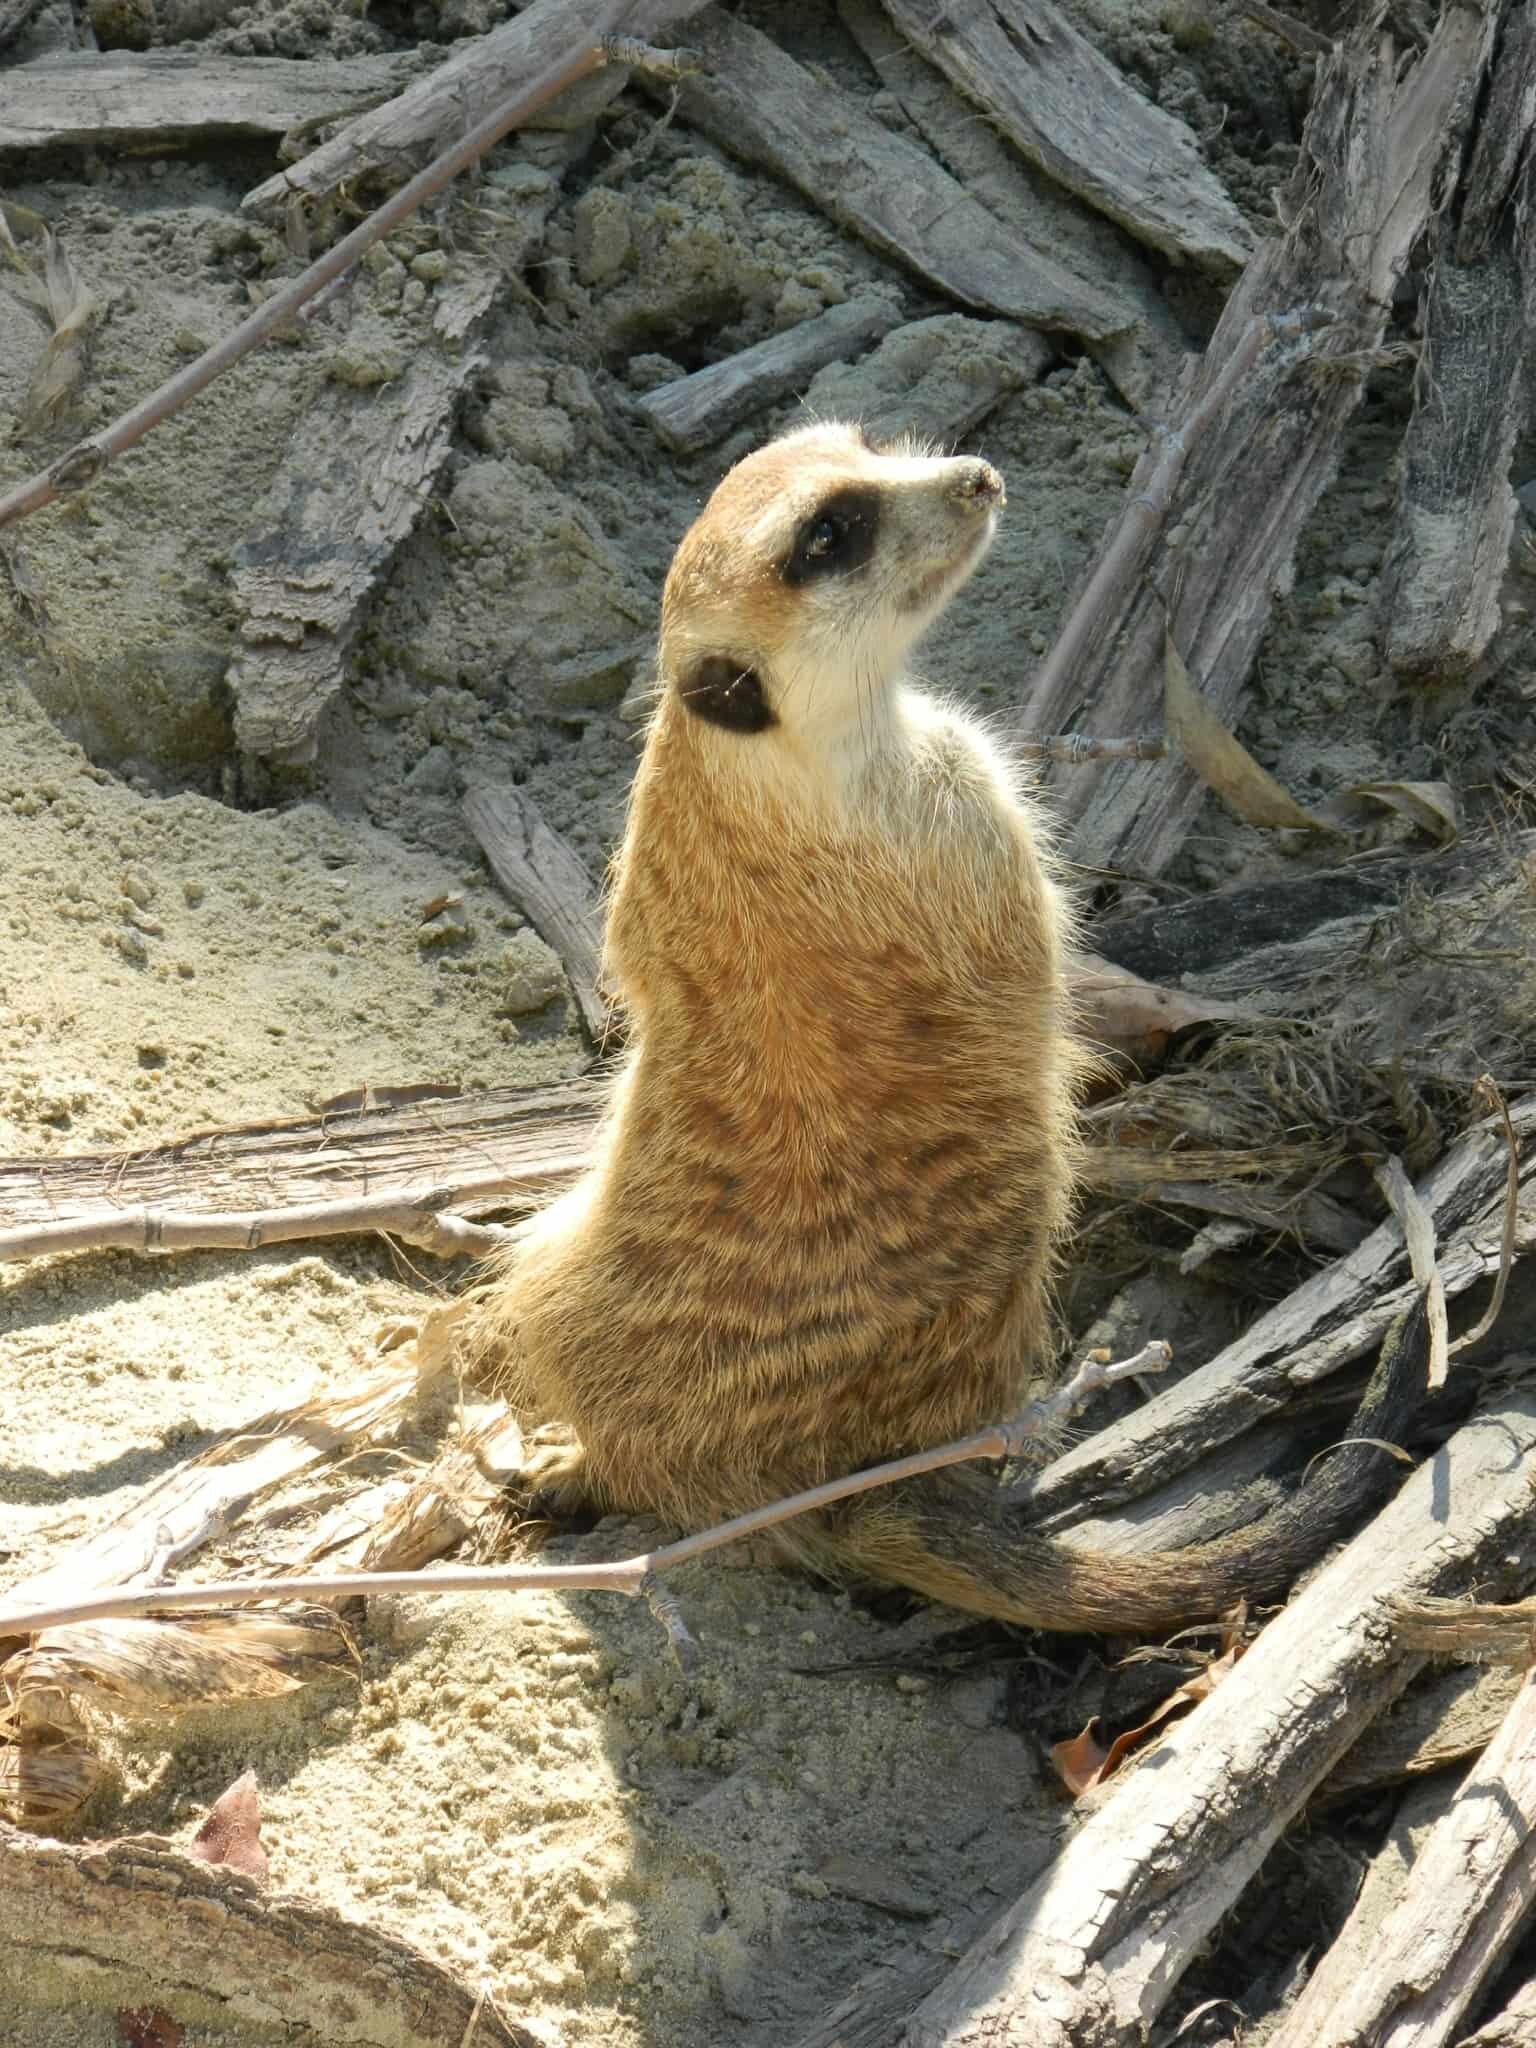 Nosy meerkat at Budapest Zoo